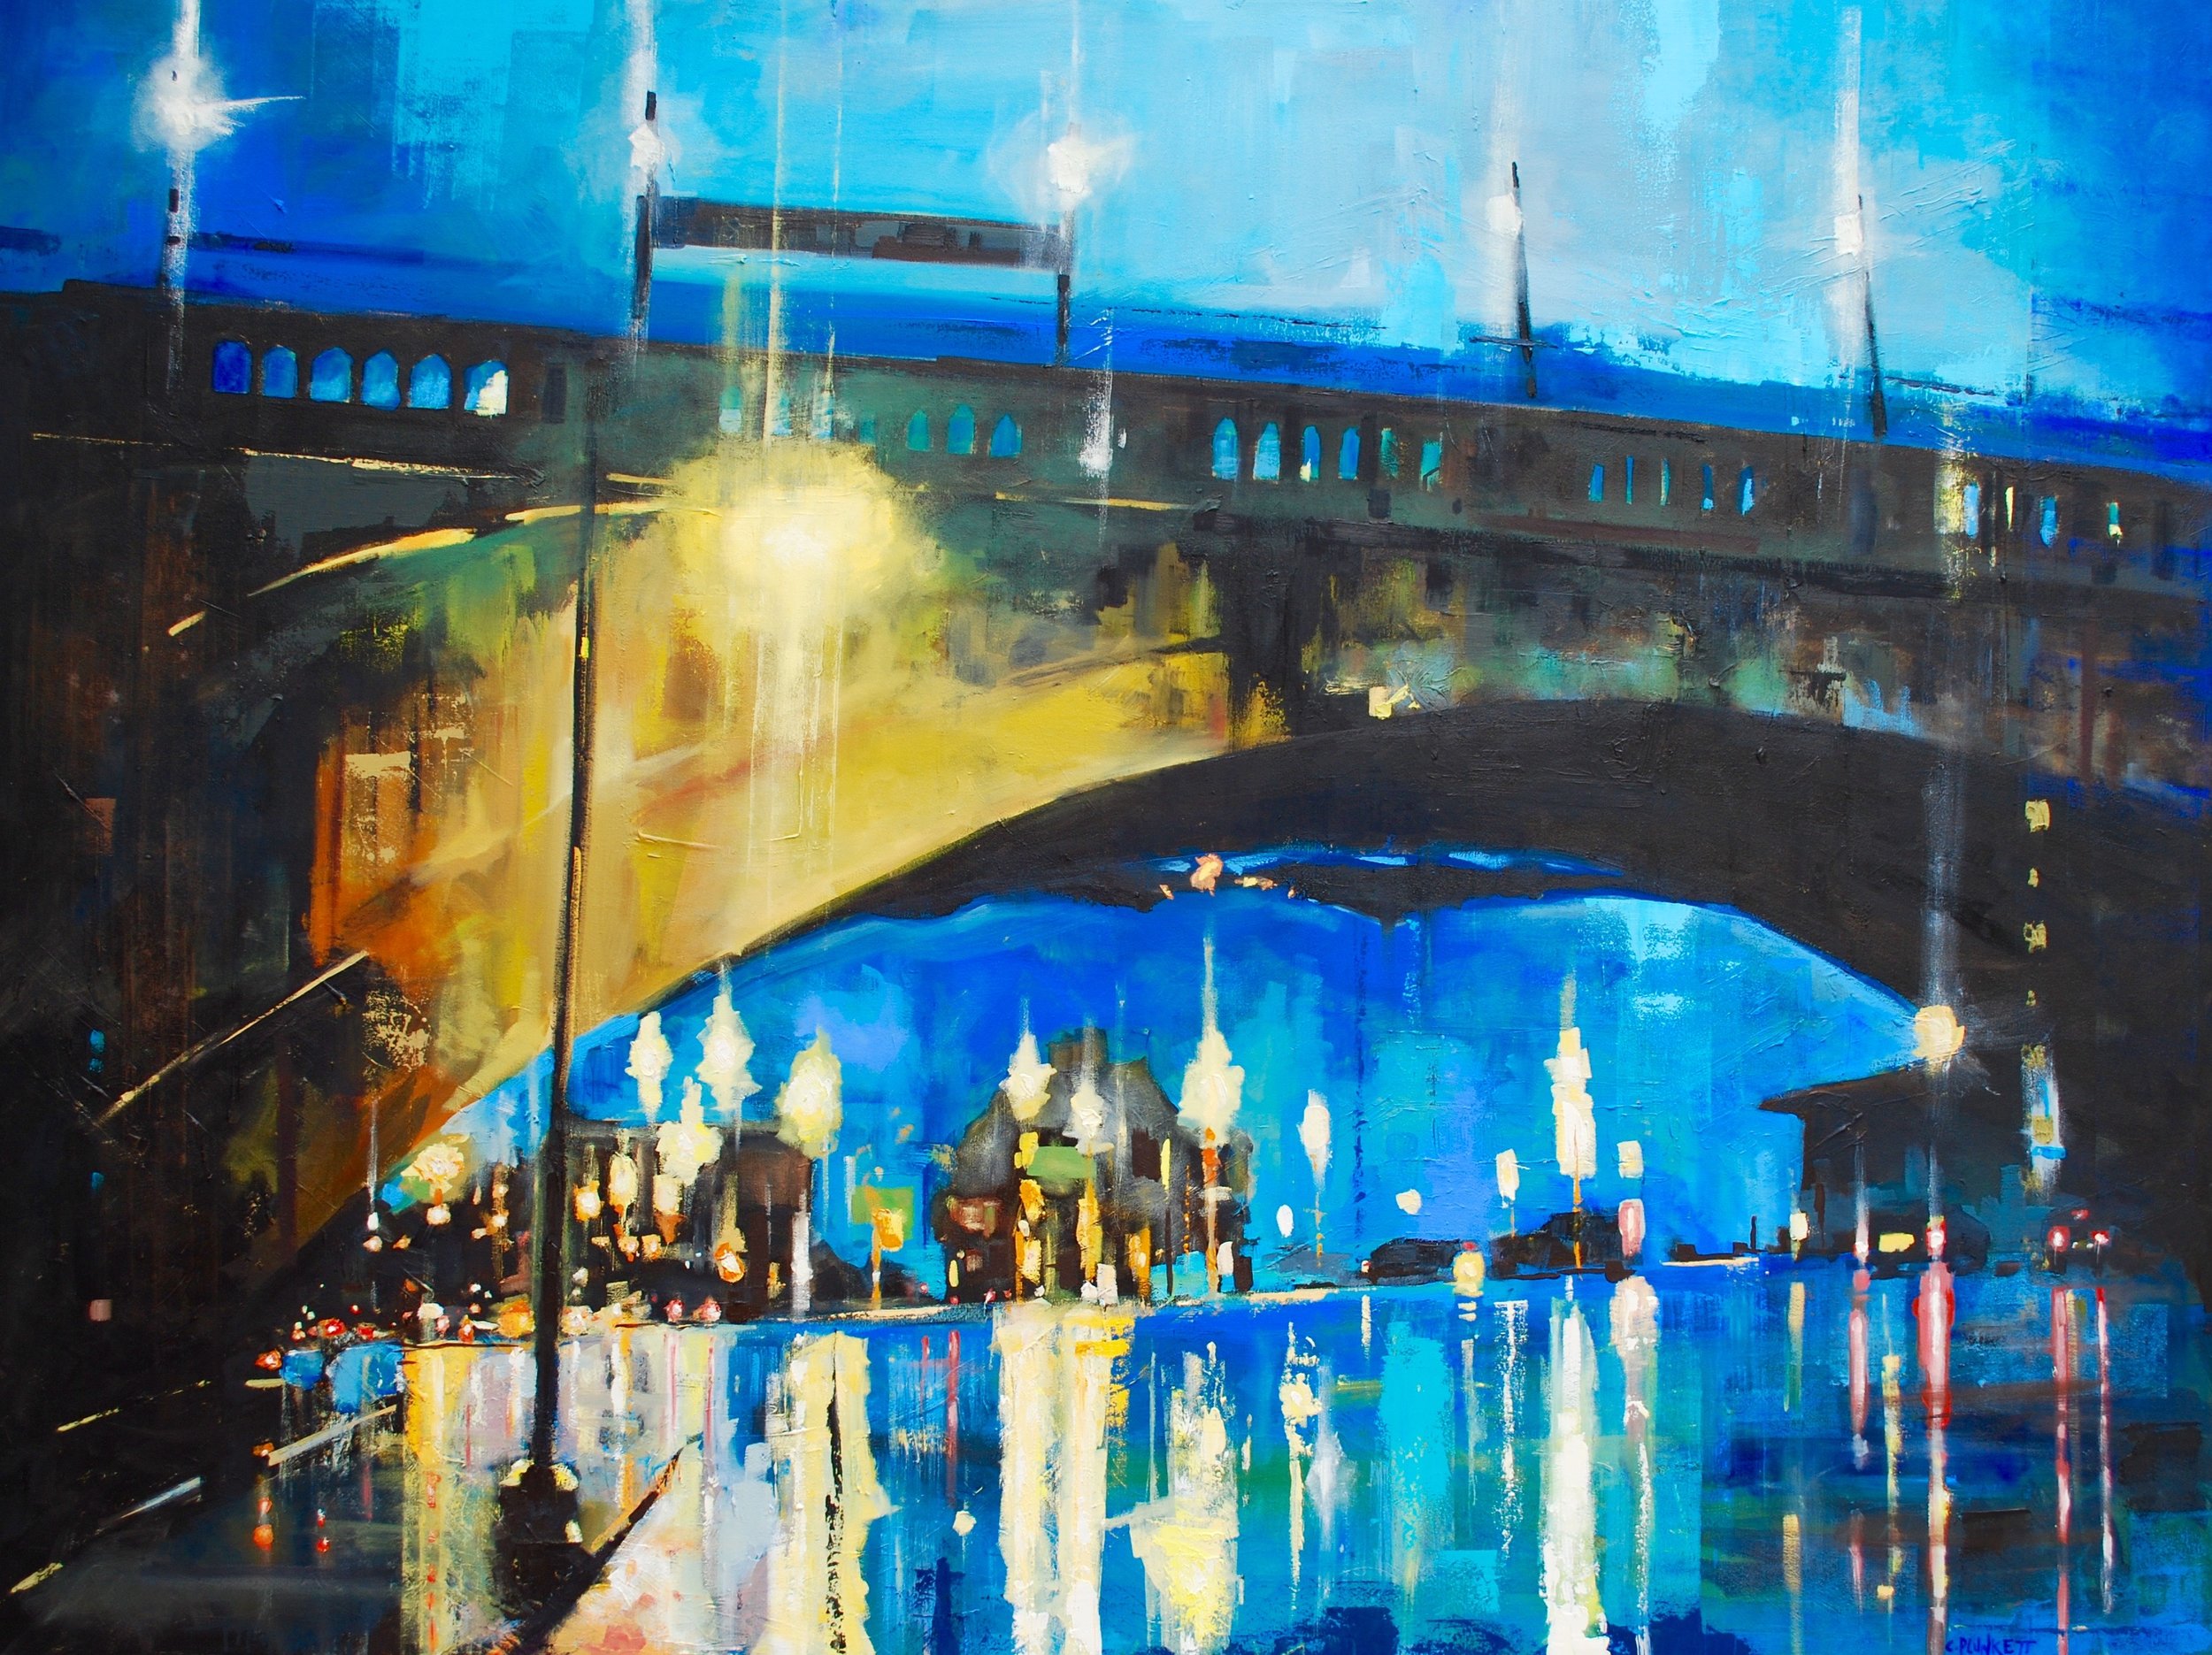  Chris Plulnkett,  Lechmere Viaduct #2 , Oil on canvas, 56x72 